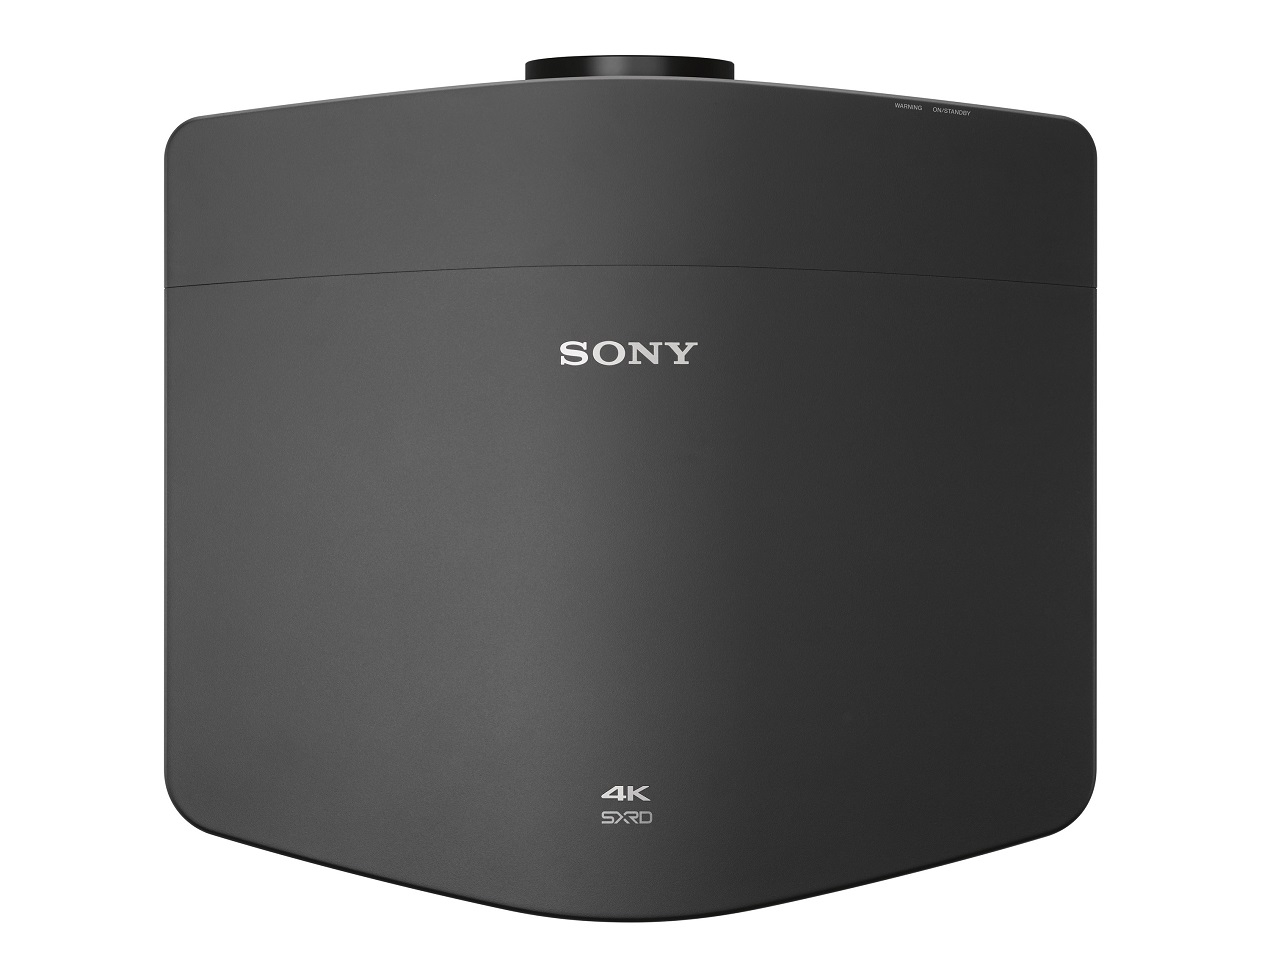 Sony VPL-VW870/B black